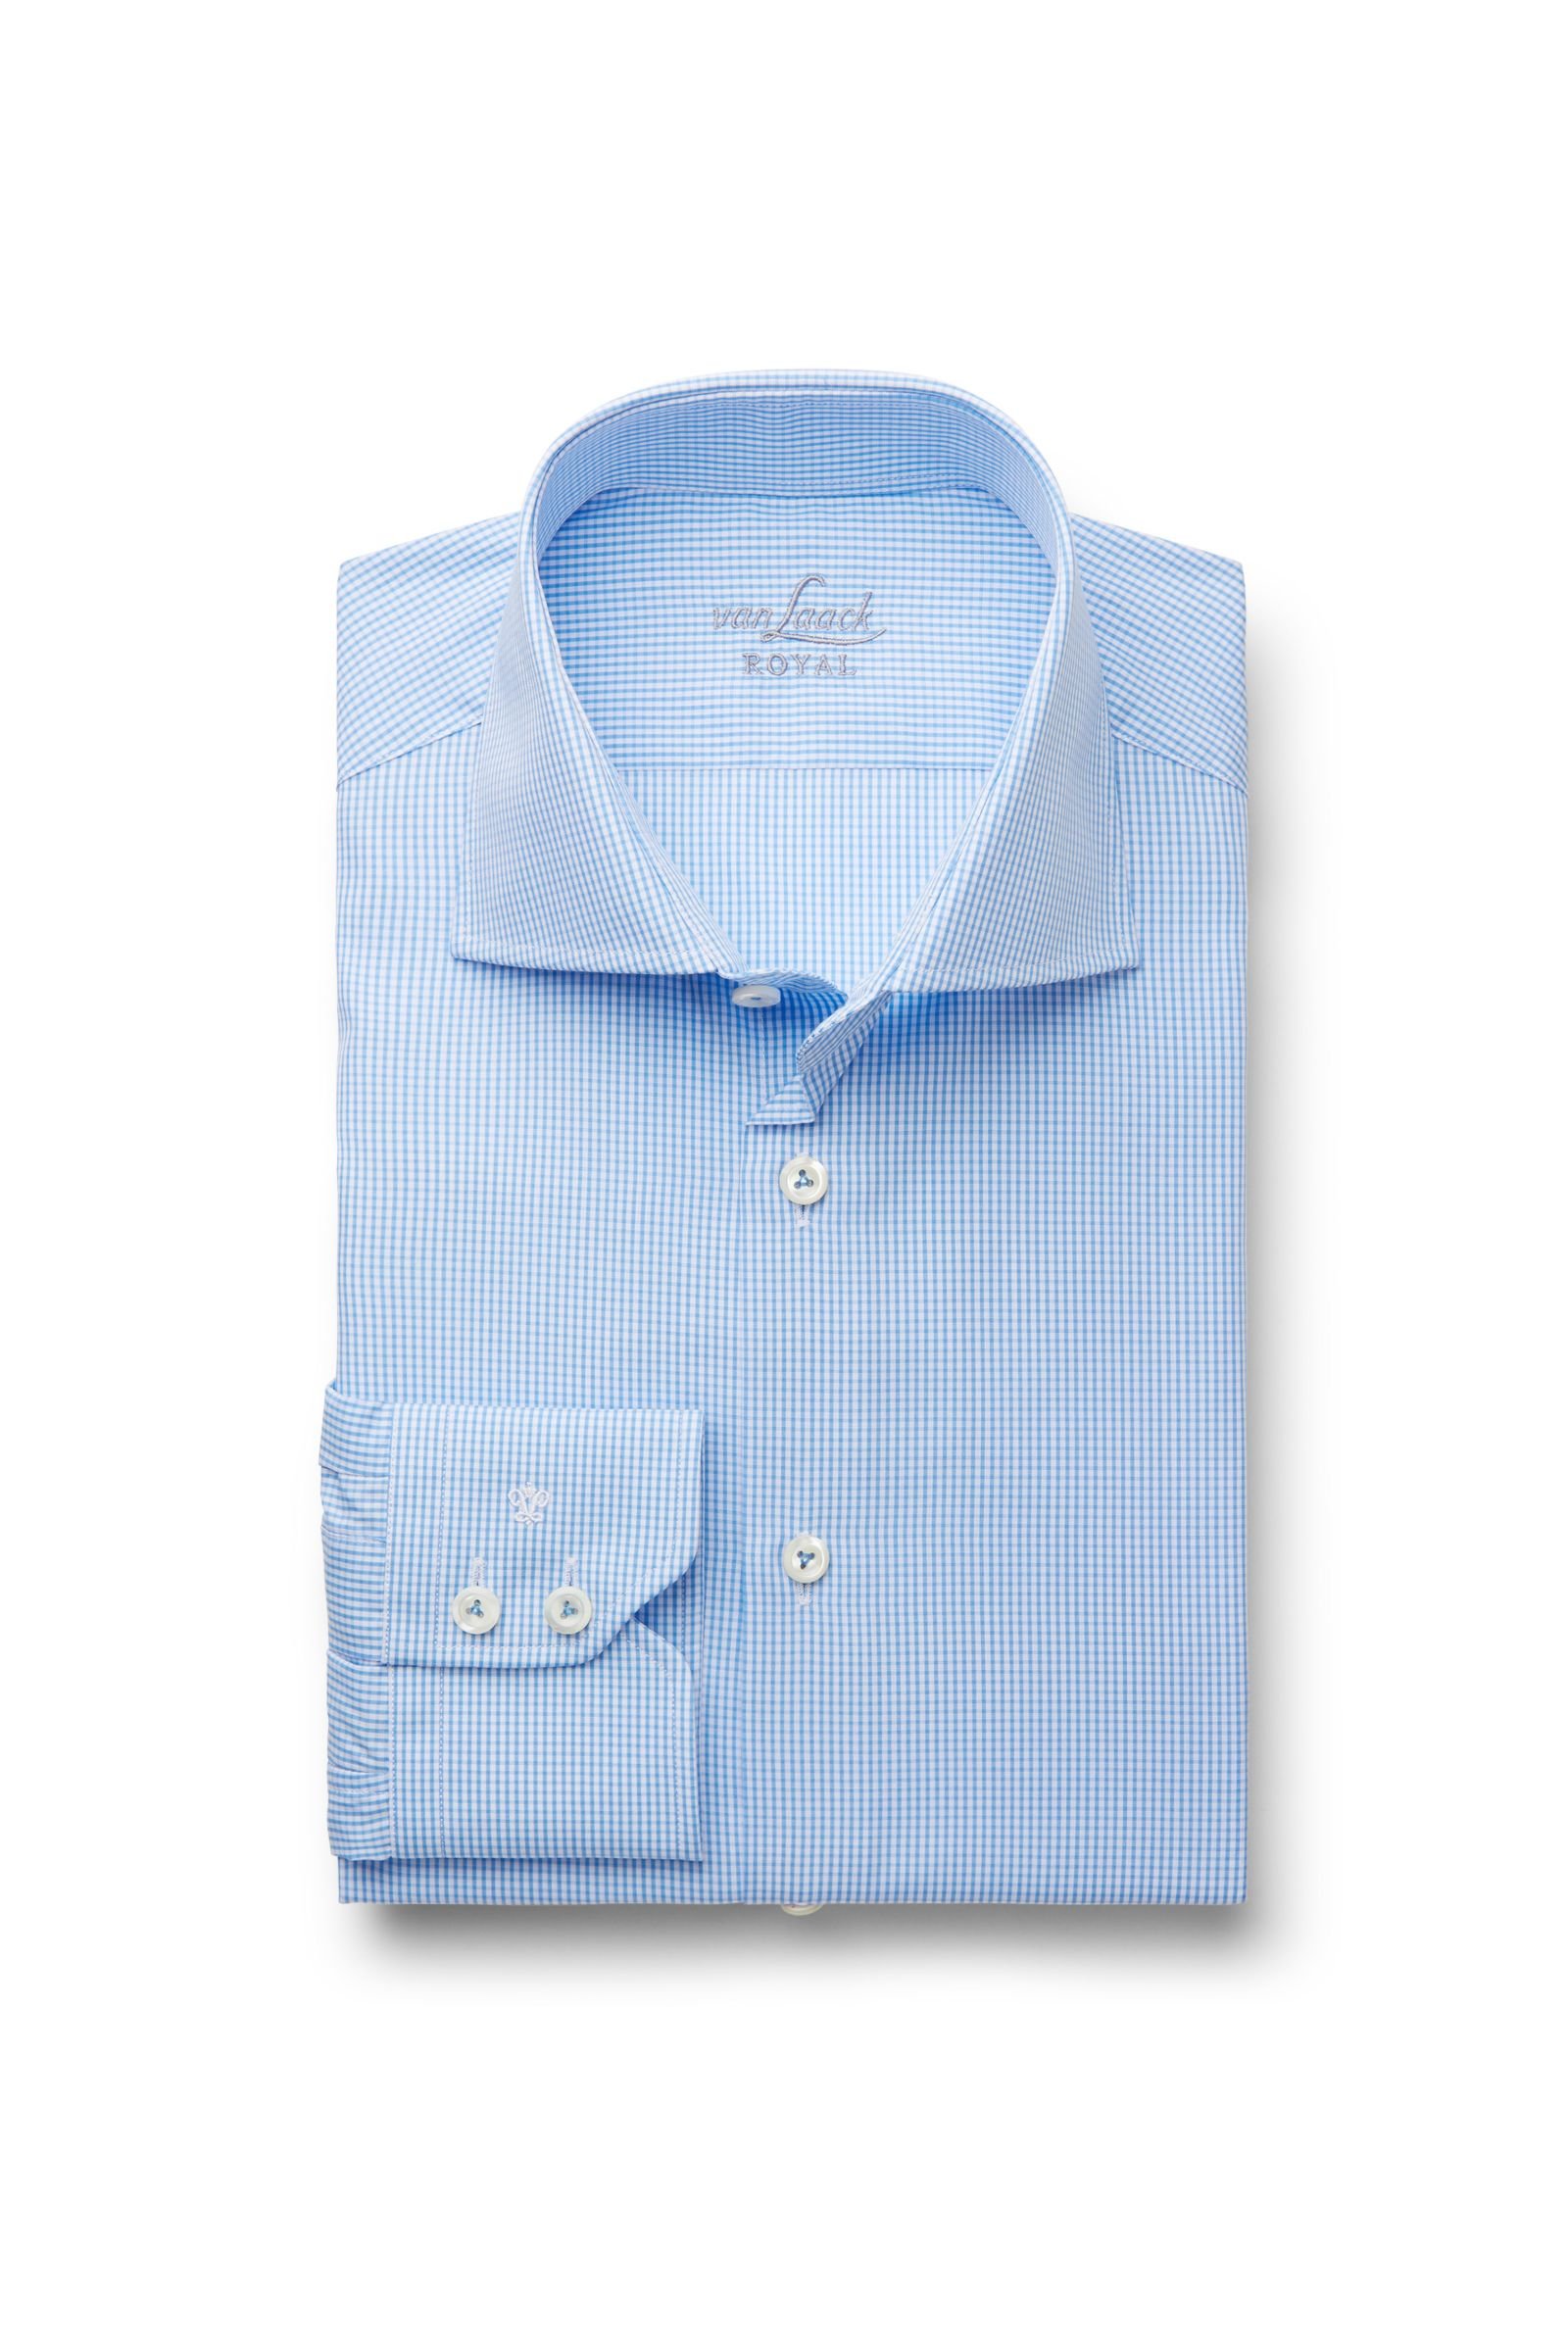 Business shirt 'Rivara Tailor Fit' shark collar blue checked